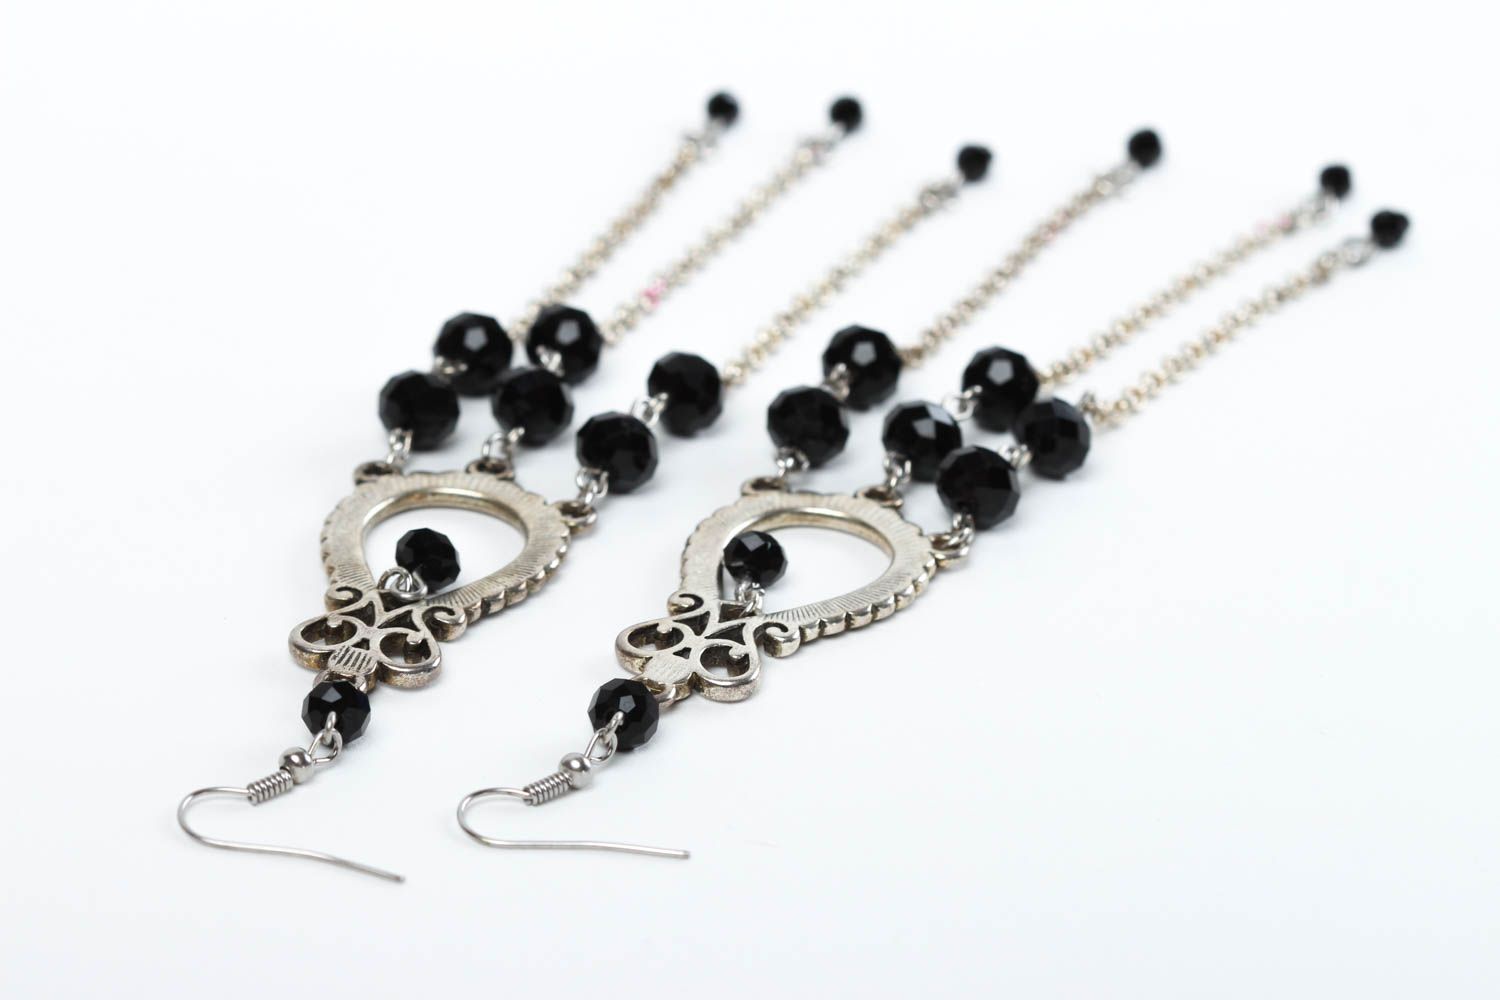 Handmade earrings long earrings designer jewelry fashion accessories gift ideas photo 4